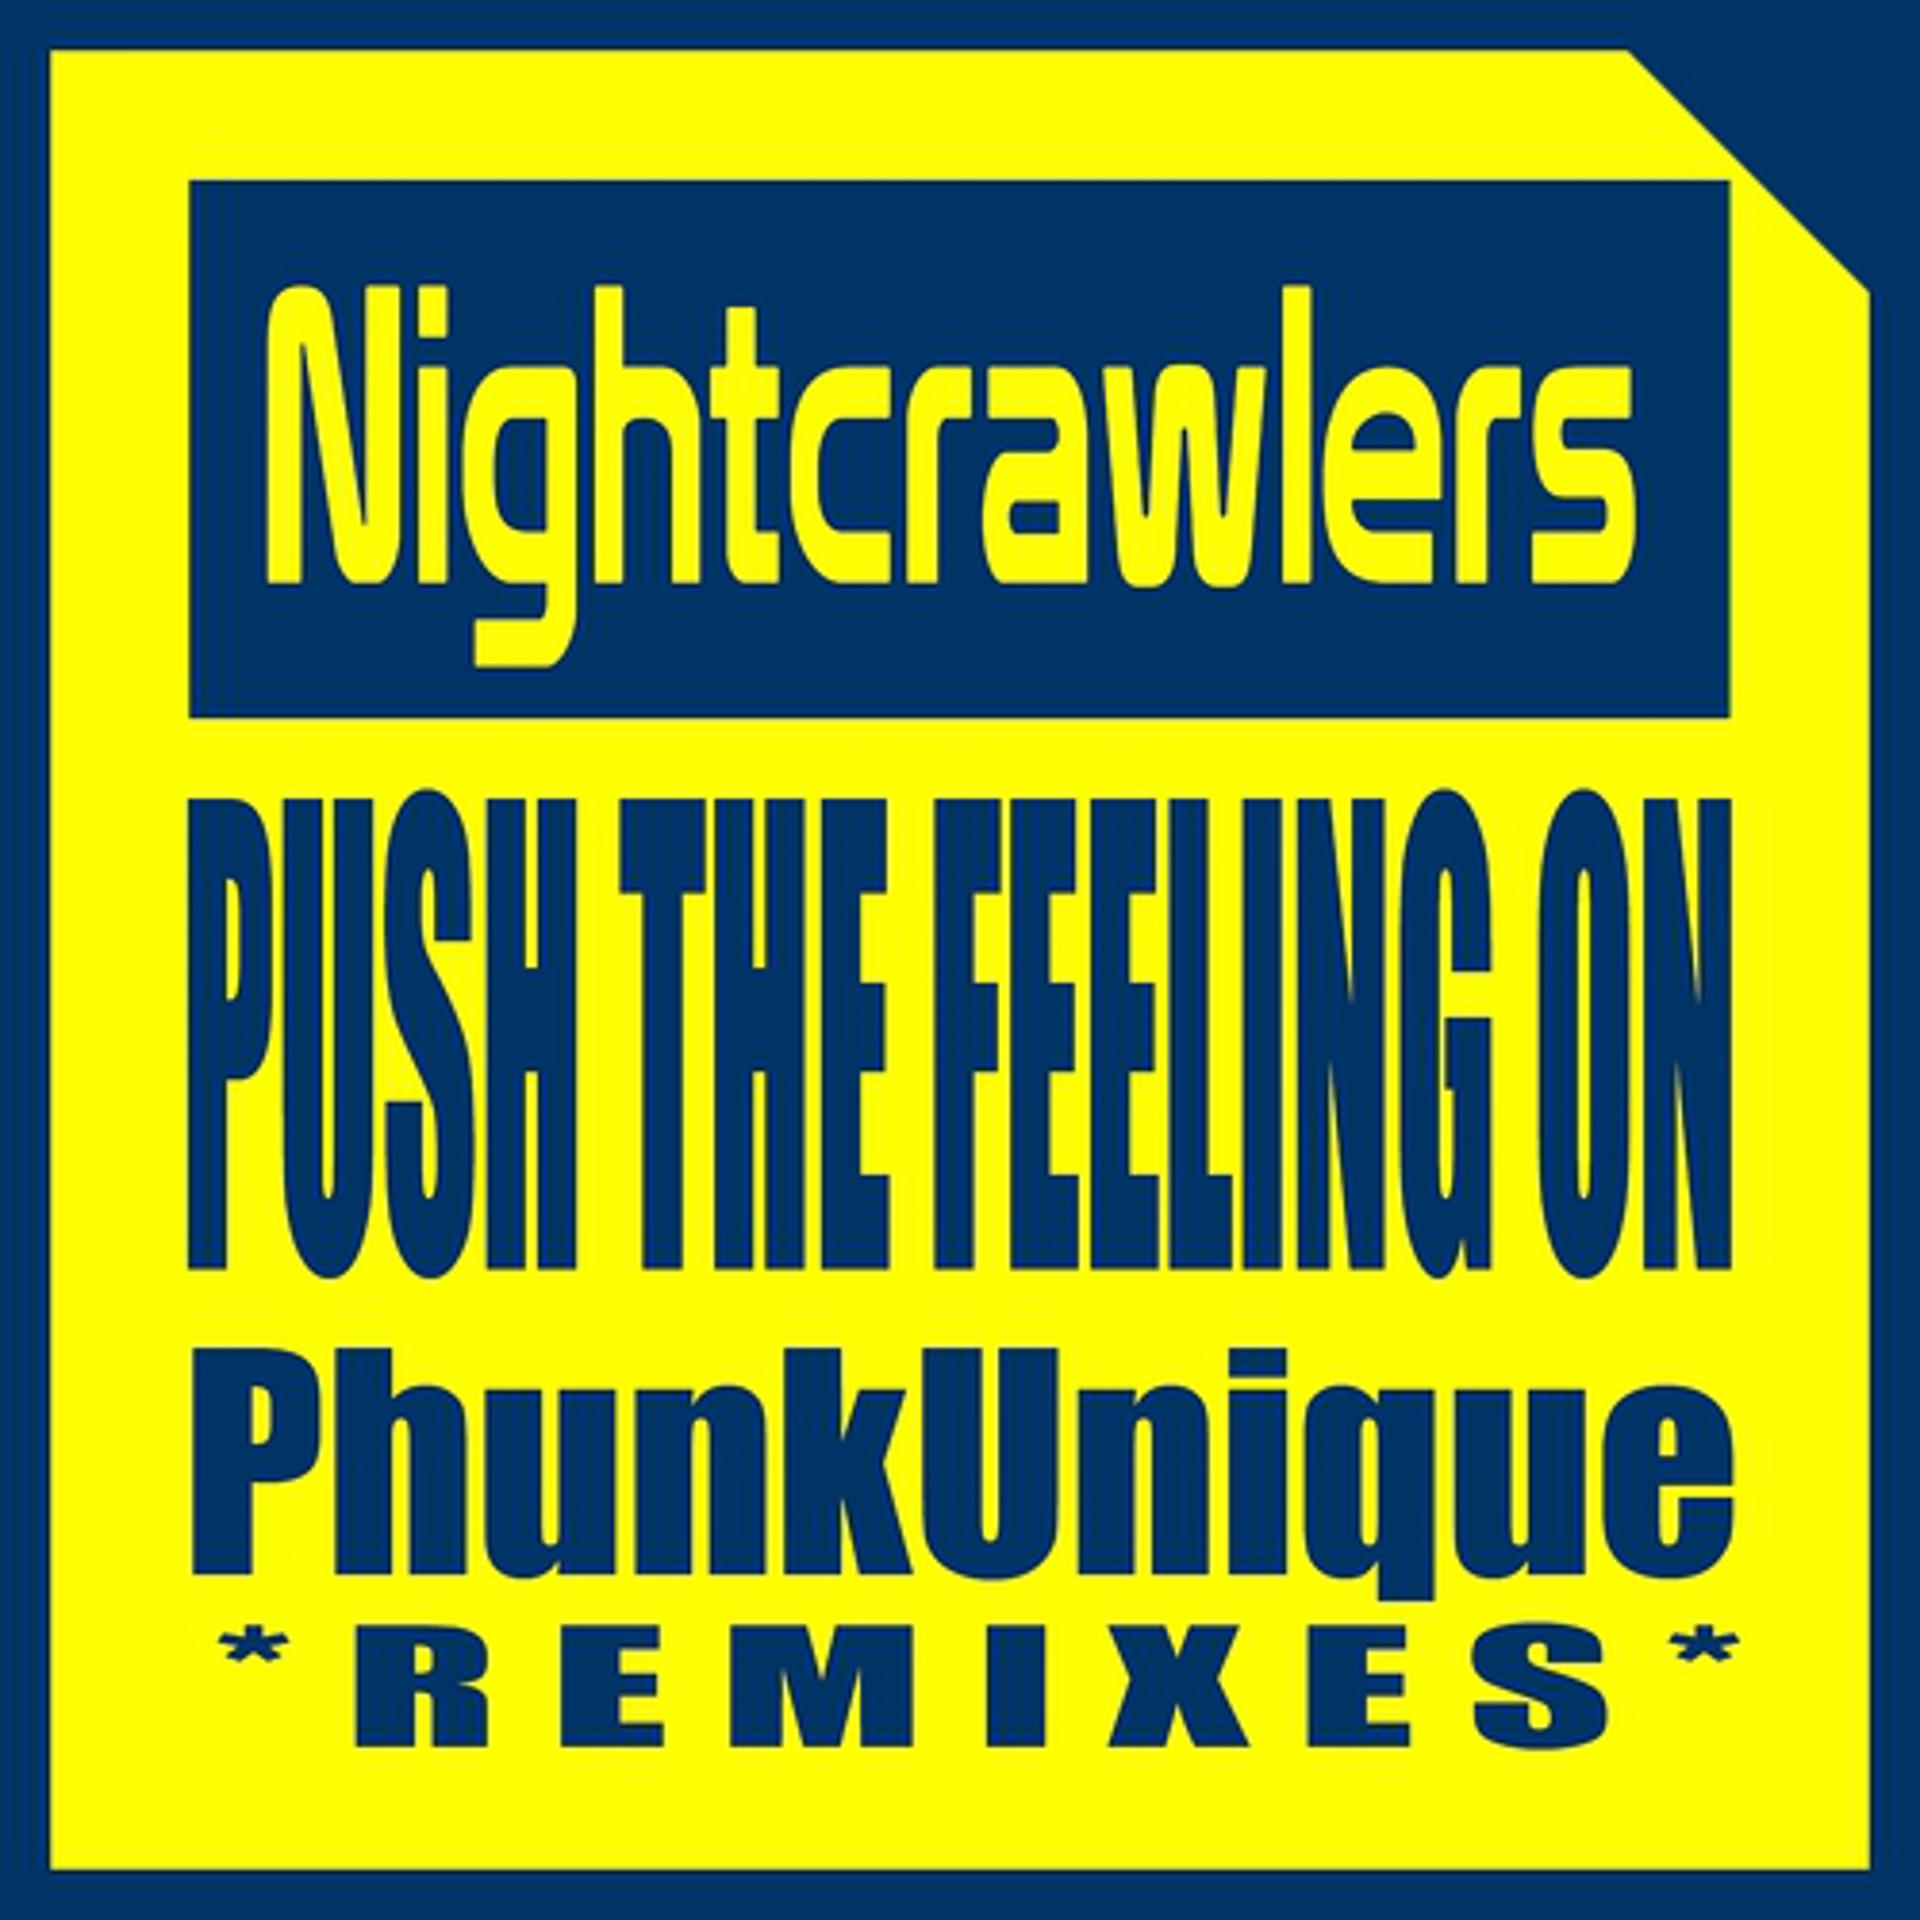 Nightcrawlers feeling on. Nightcrawlers Push the feeling on. Nightcrawlers - Push the feeling on (MK Mix 95). Push the feeling on Remix. Nightcrawlers Push the feeling on Single.